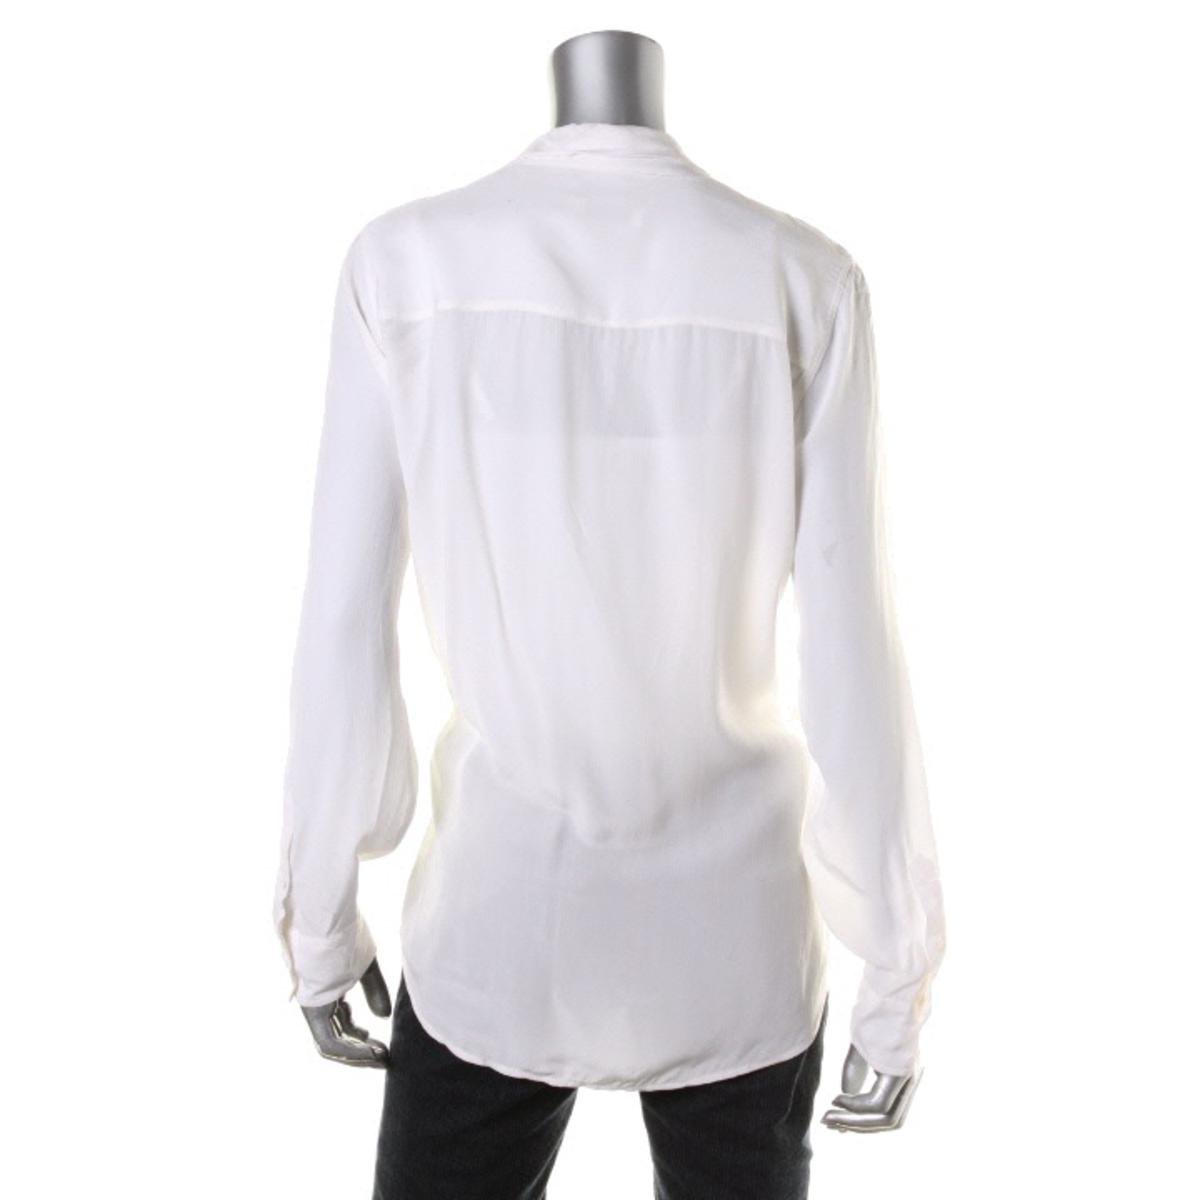 Equipment Femme 4906 Womens White Silk Long Sleeves Blouse Top M BHFO